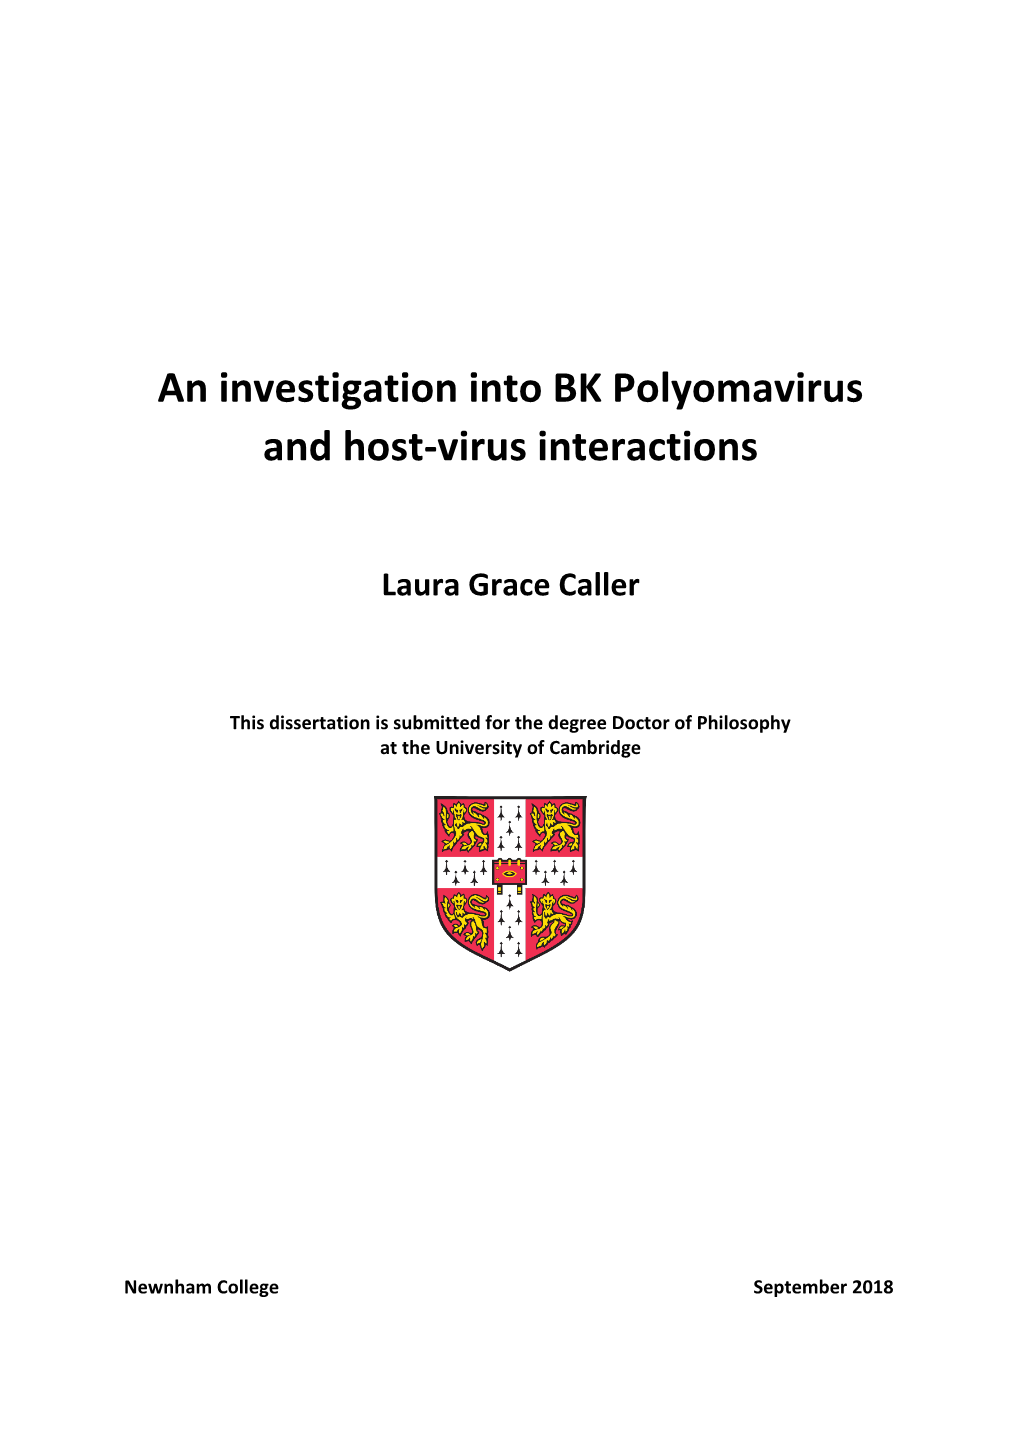 An Investigation Into BK Polyomavirus and Host-Virus Interactions